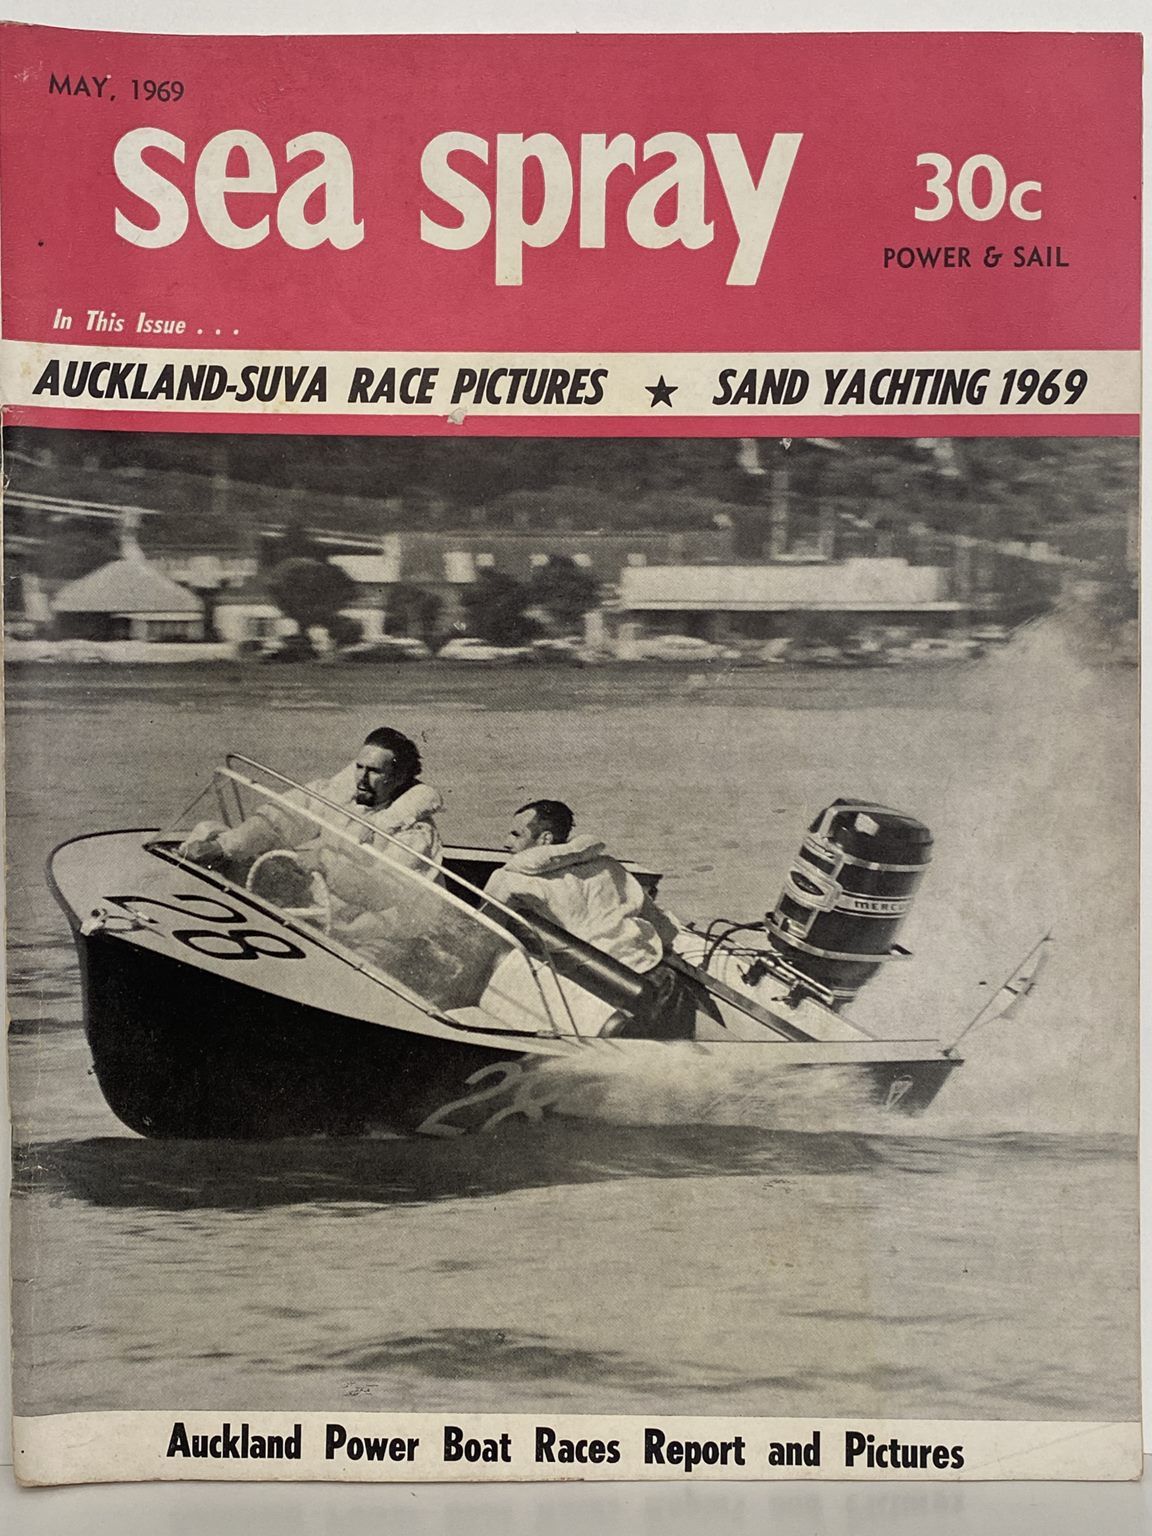 VINTAGE MAGAZINE: Sea Spray / Power & Sail - Vol. 24, No. 4 - May 1969